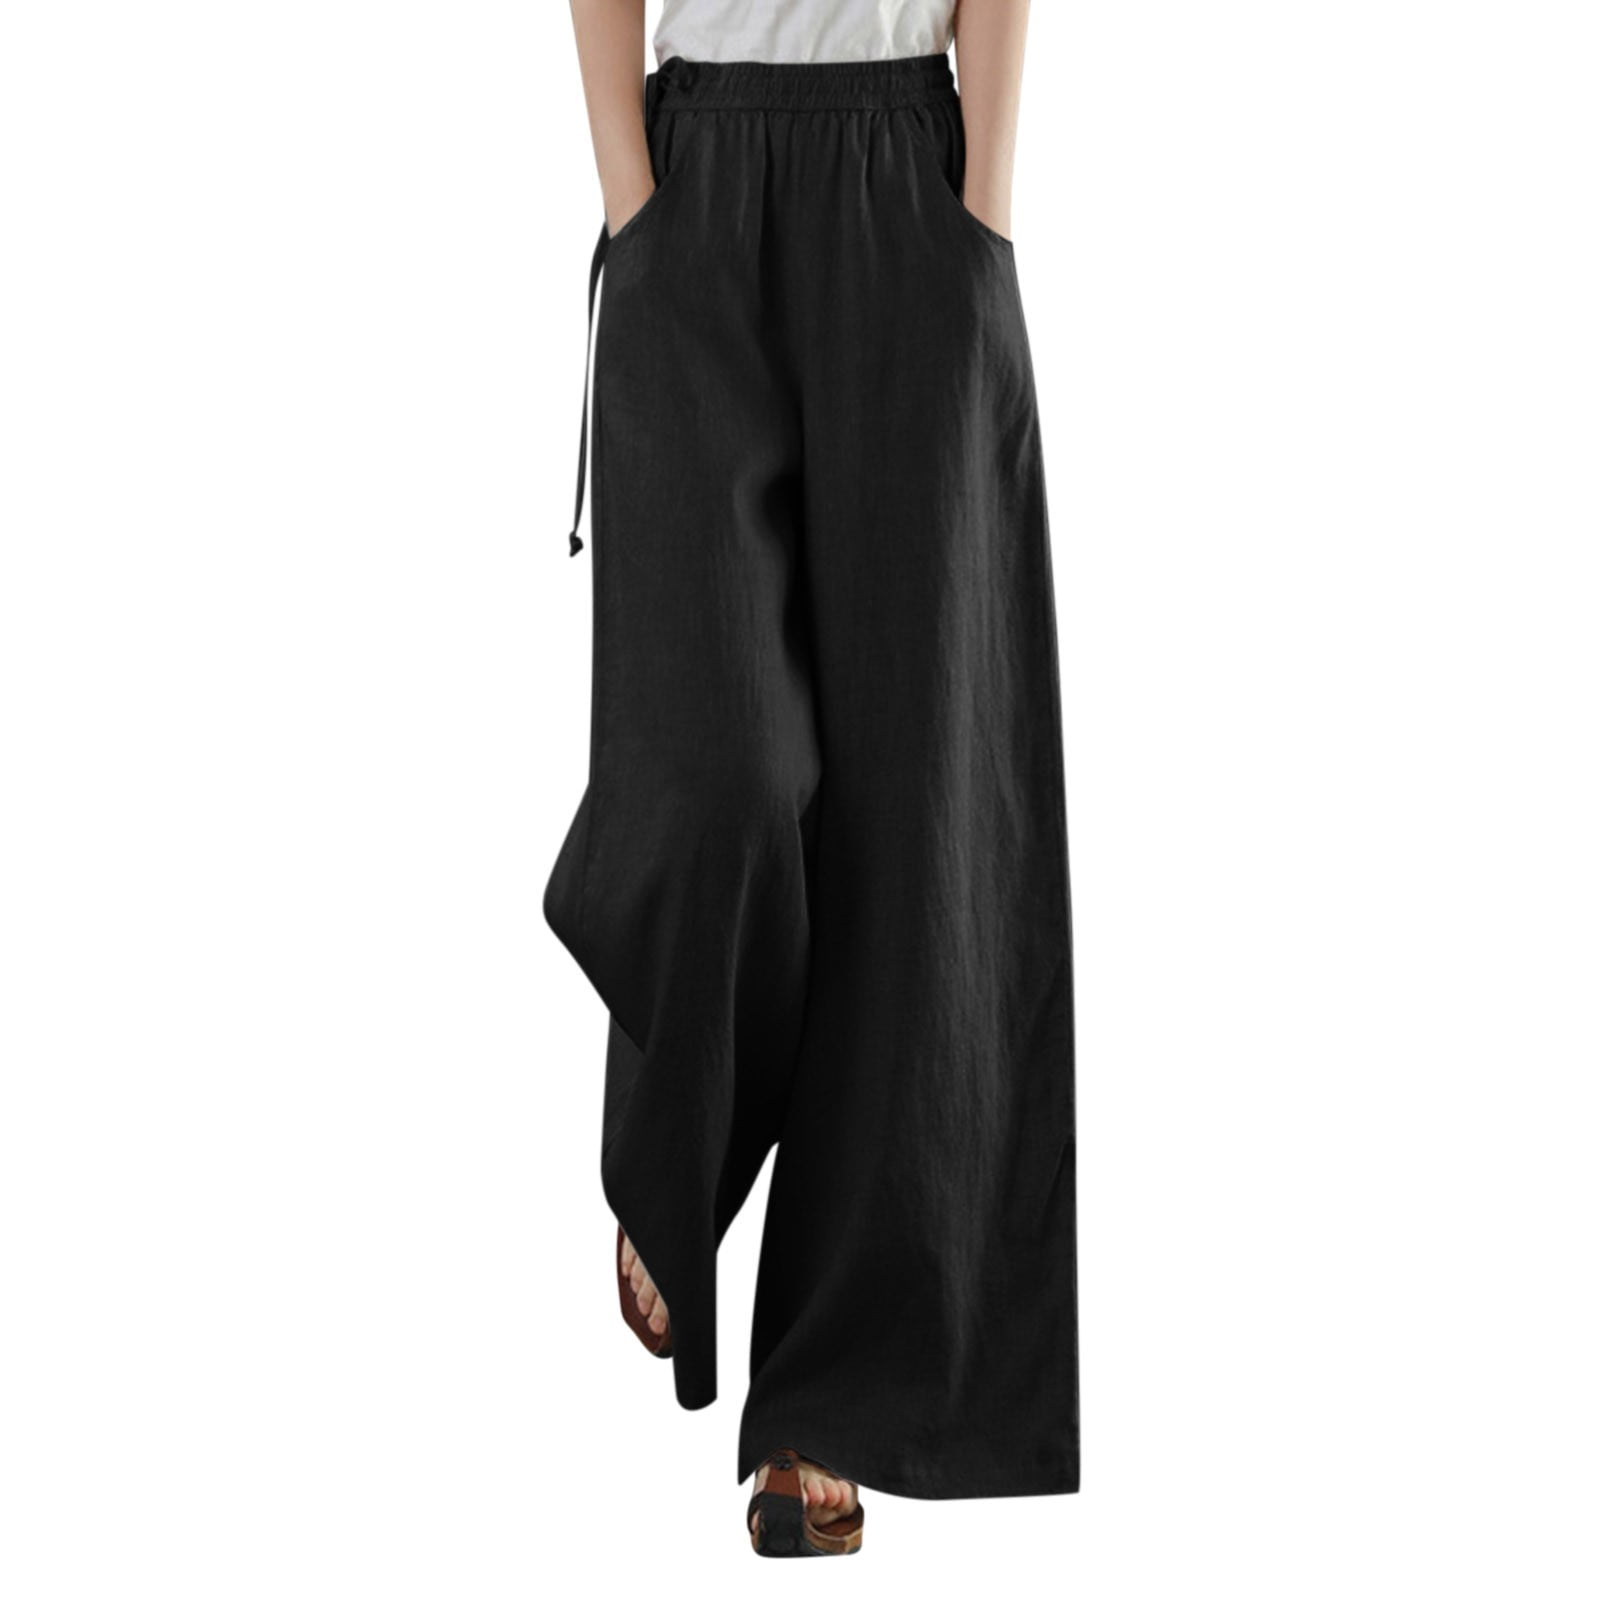 gvdentm Black Cargo Pants Women's Plus Size Curvy Fit Gabardine Bootcut  Dress Pants Trendy